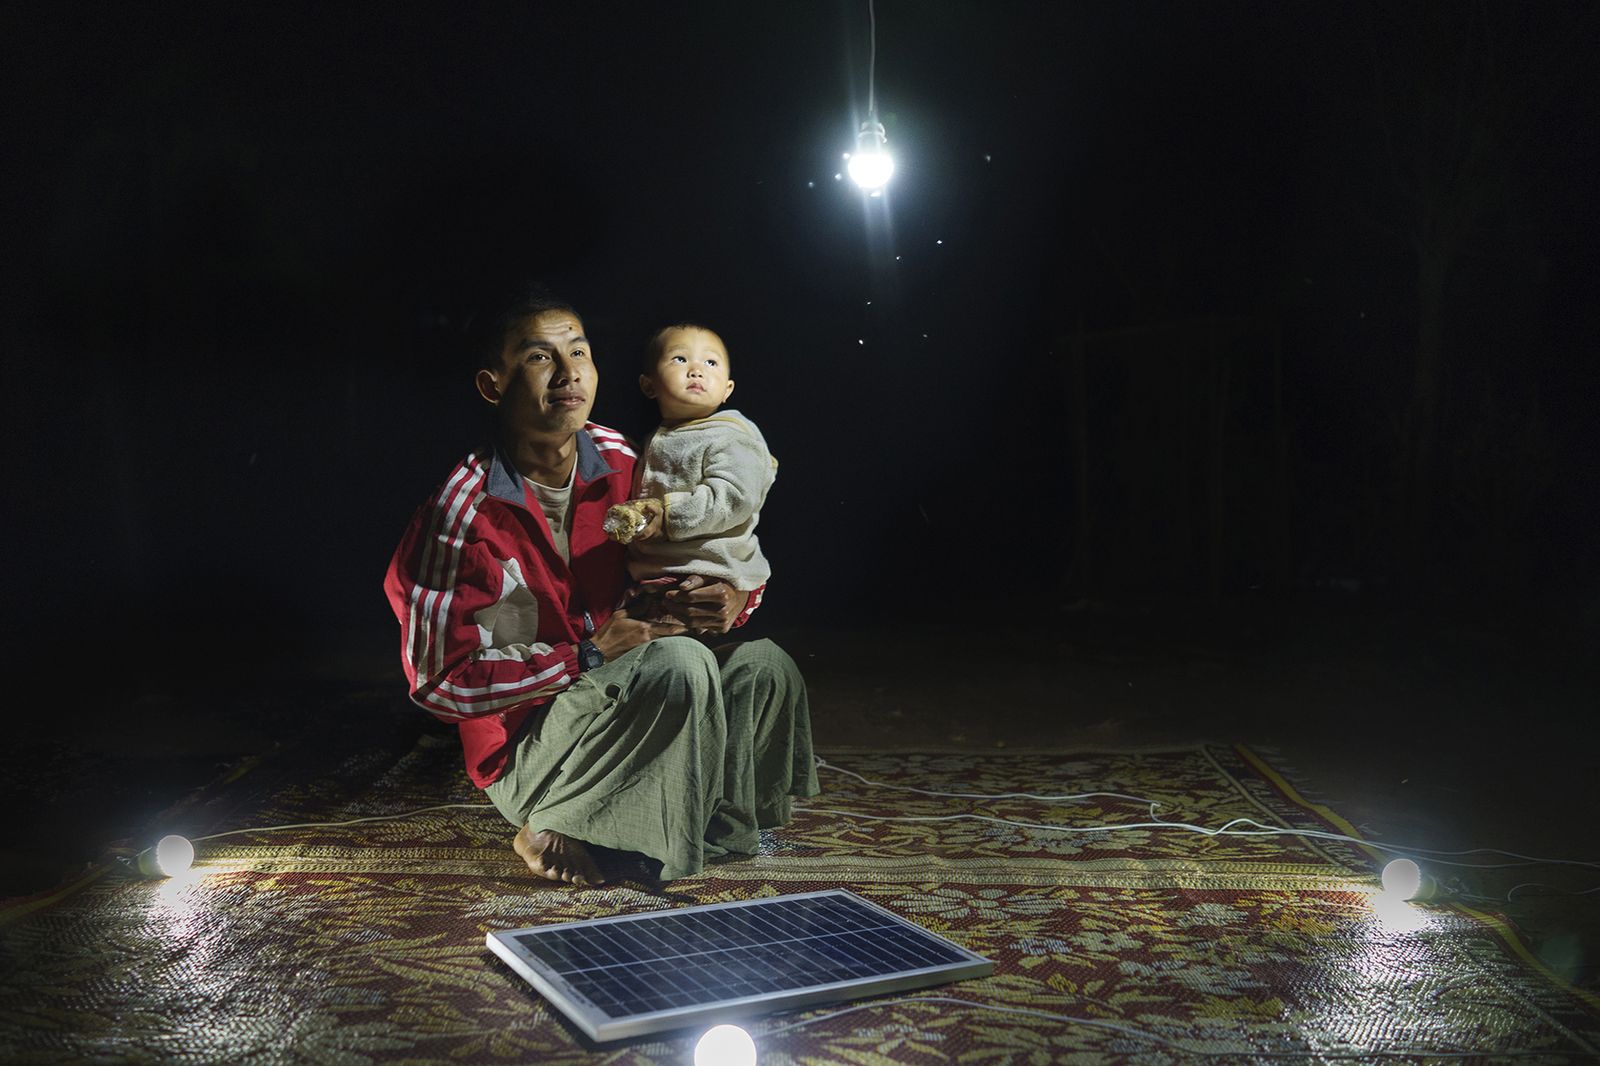 Solar Energy in Rural Myanmar